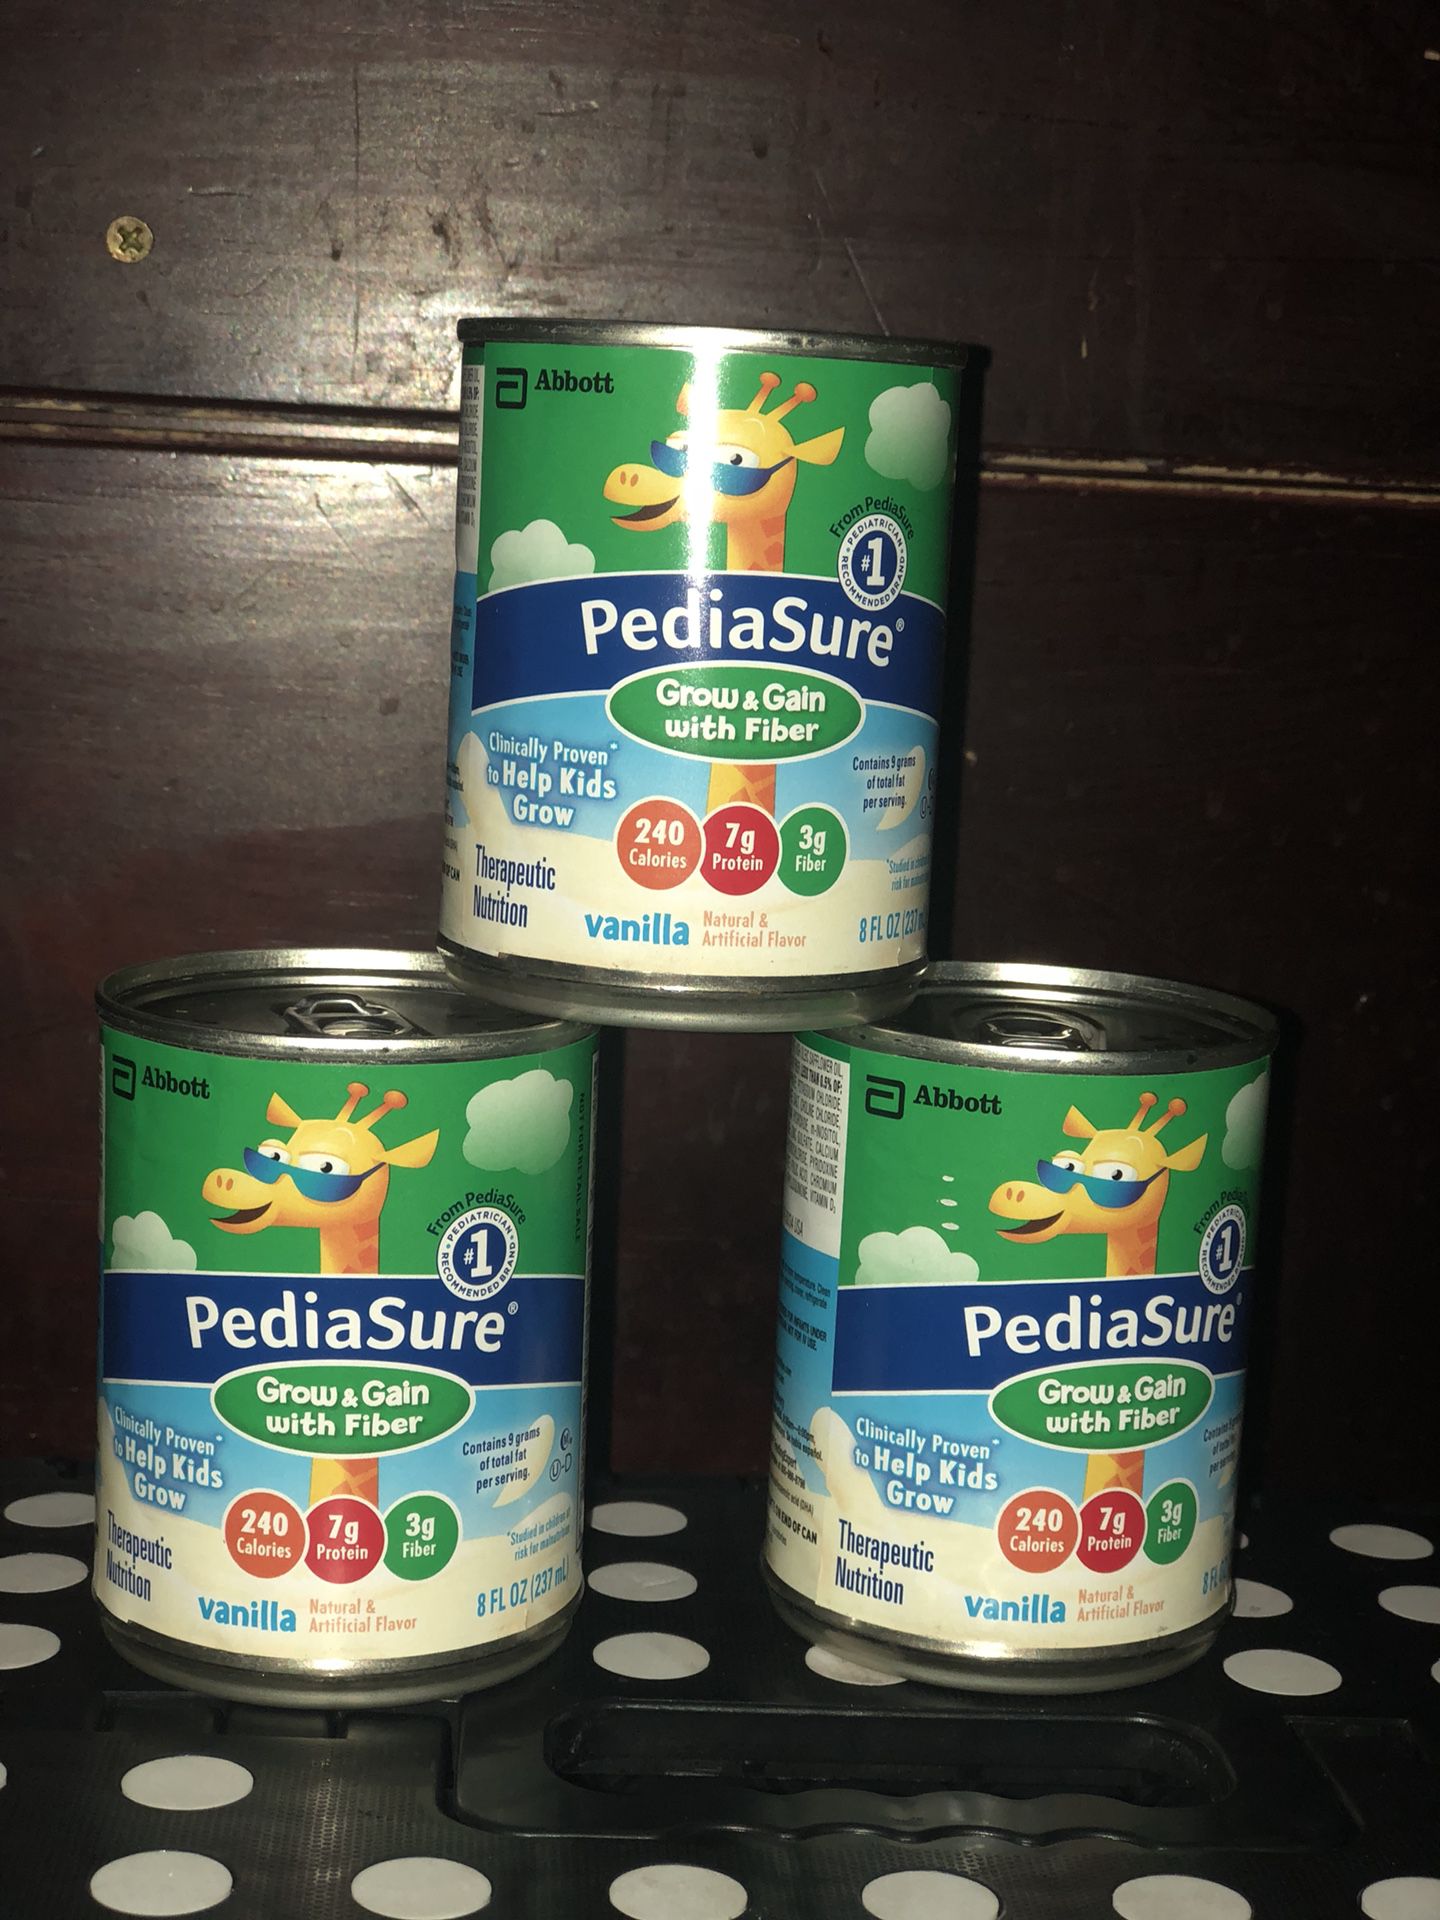 8oz cans of Pediasure with fiber